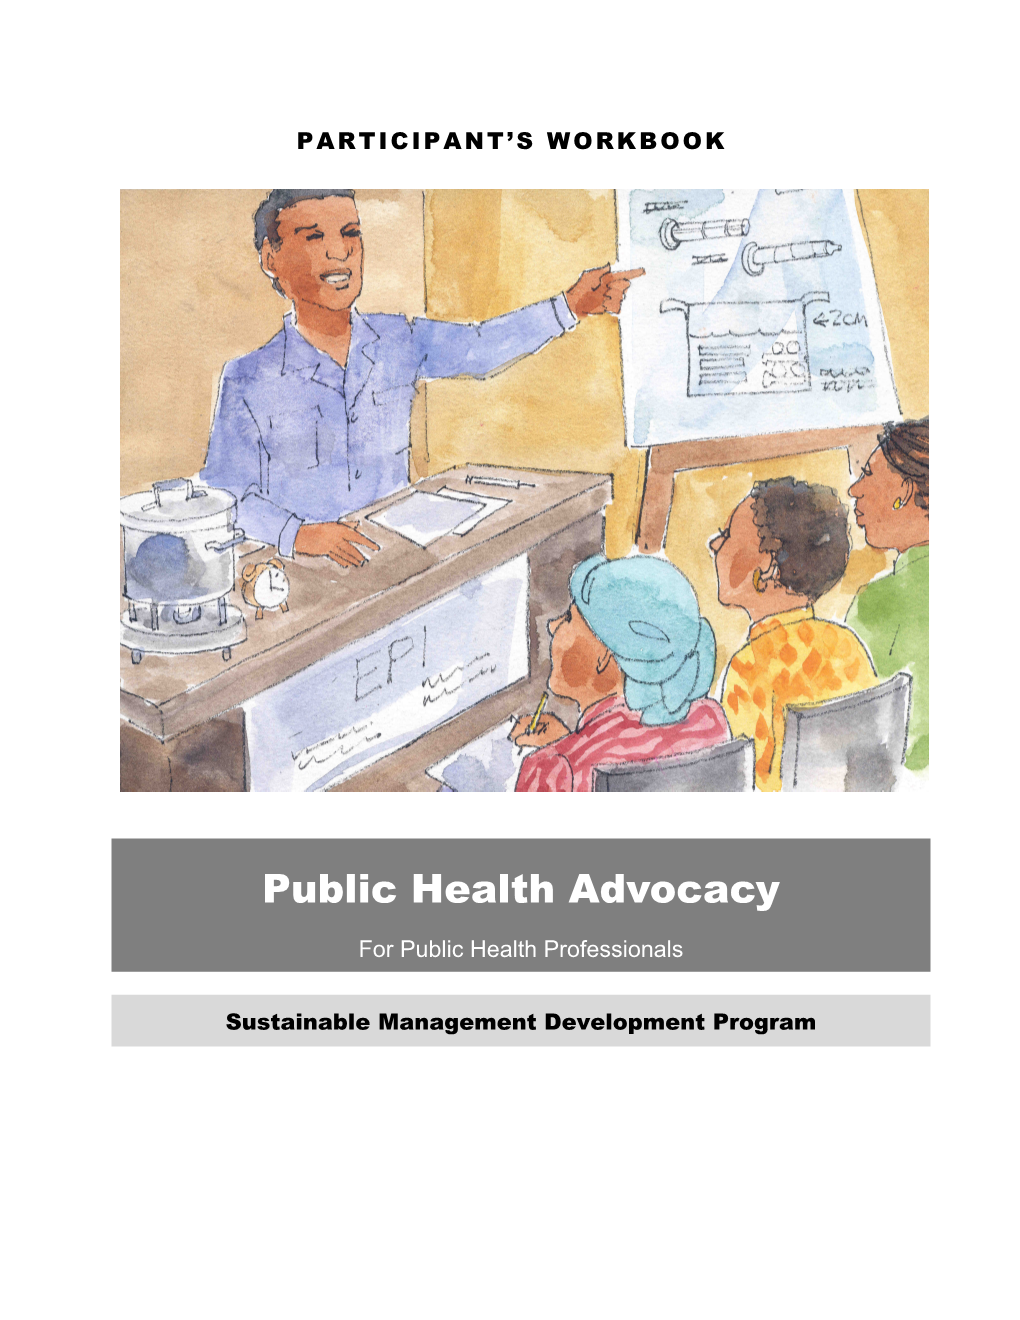 Public Health Advocacy - Participant's Guide